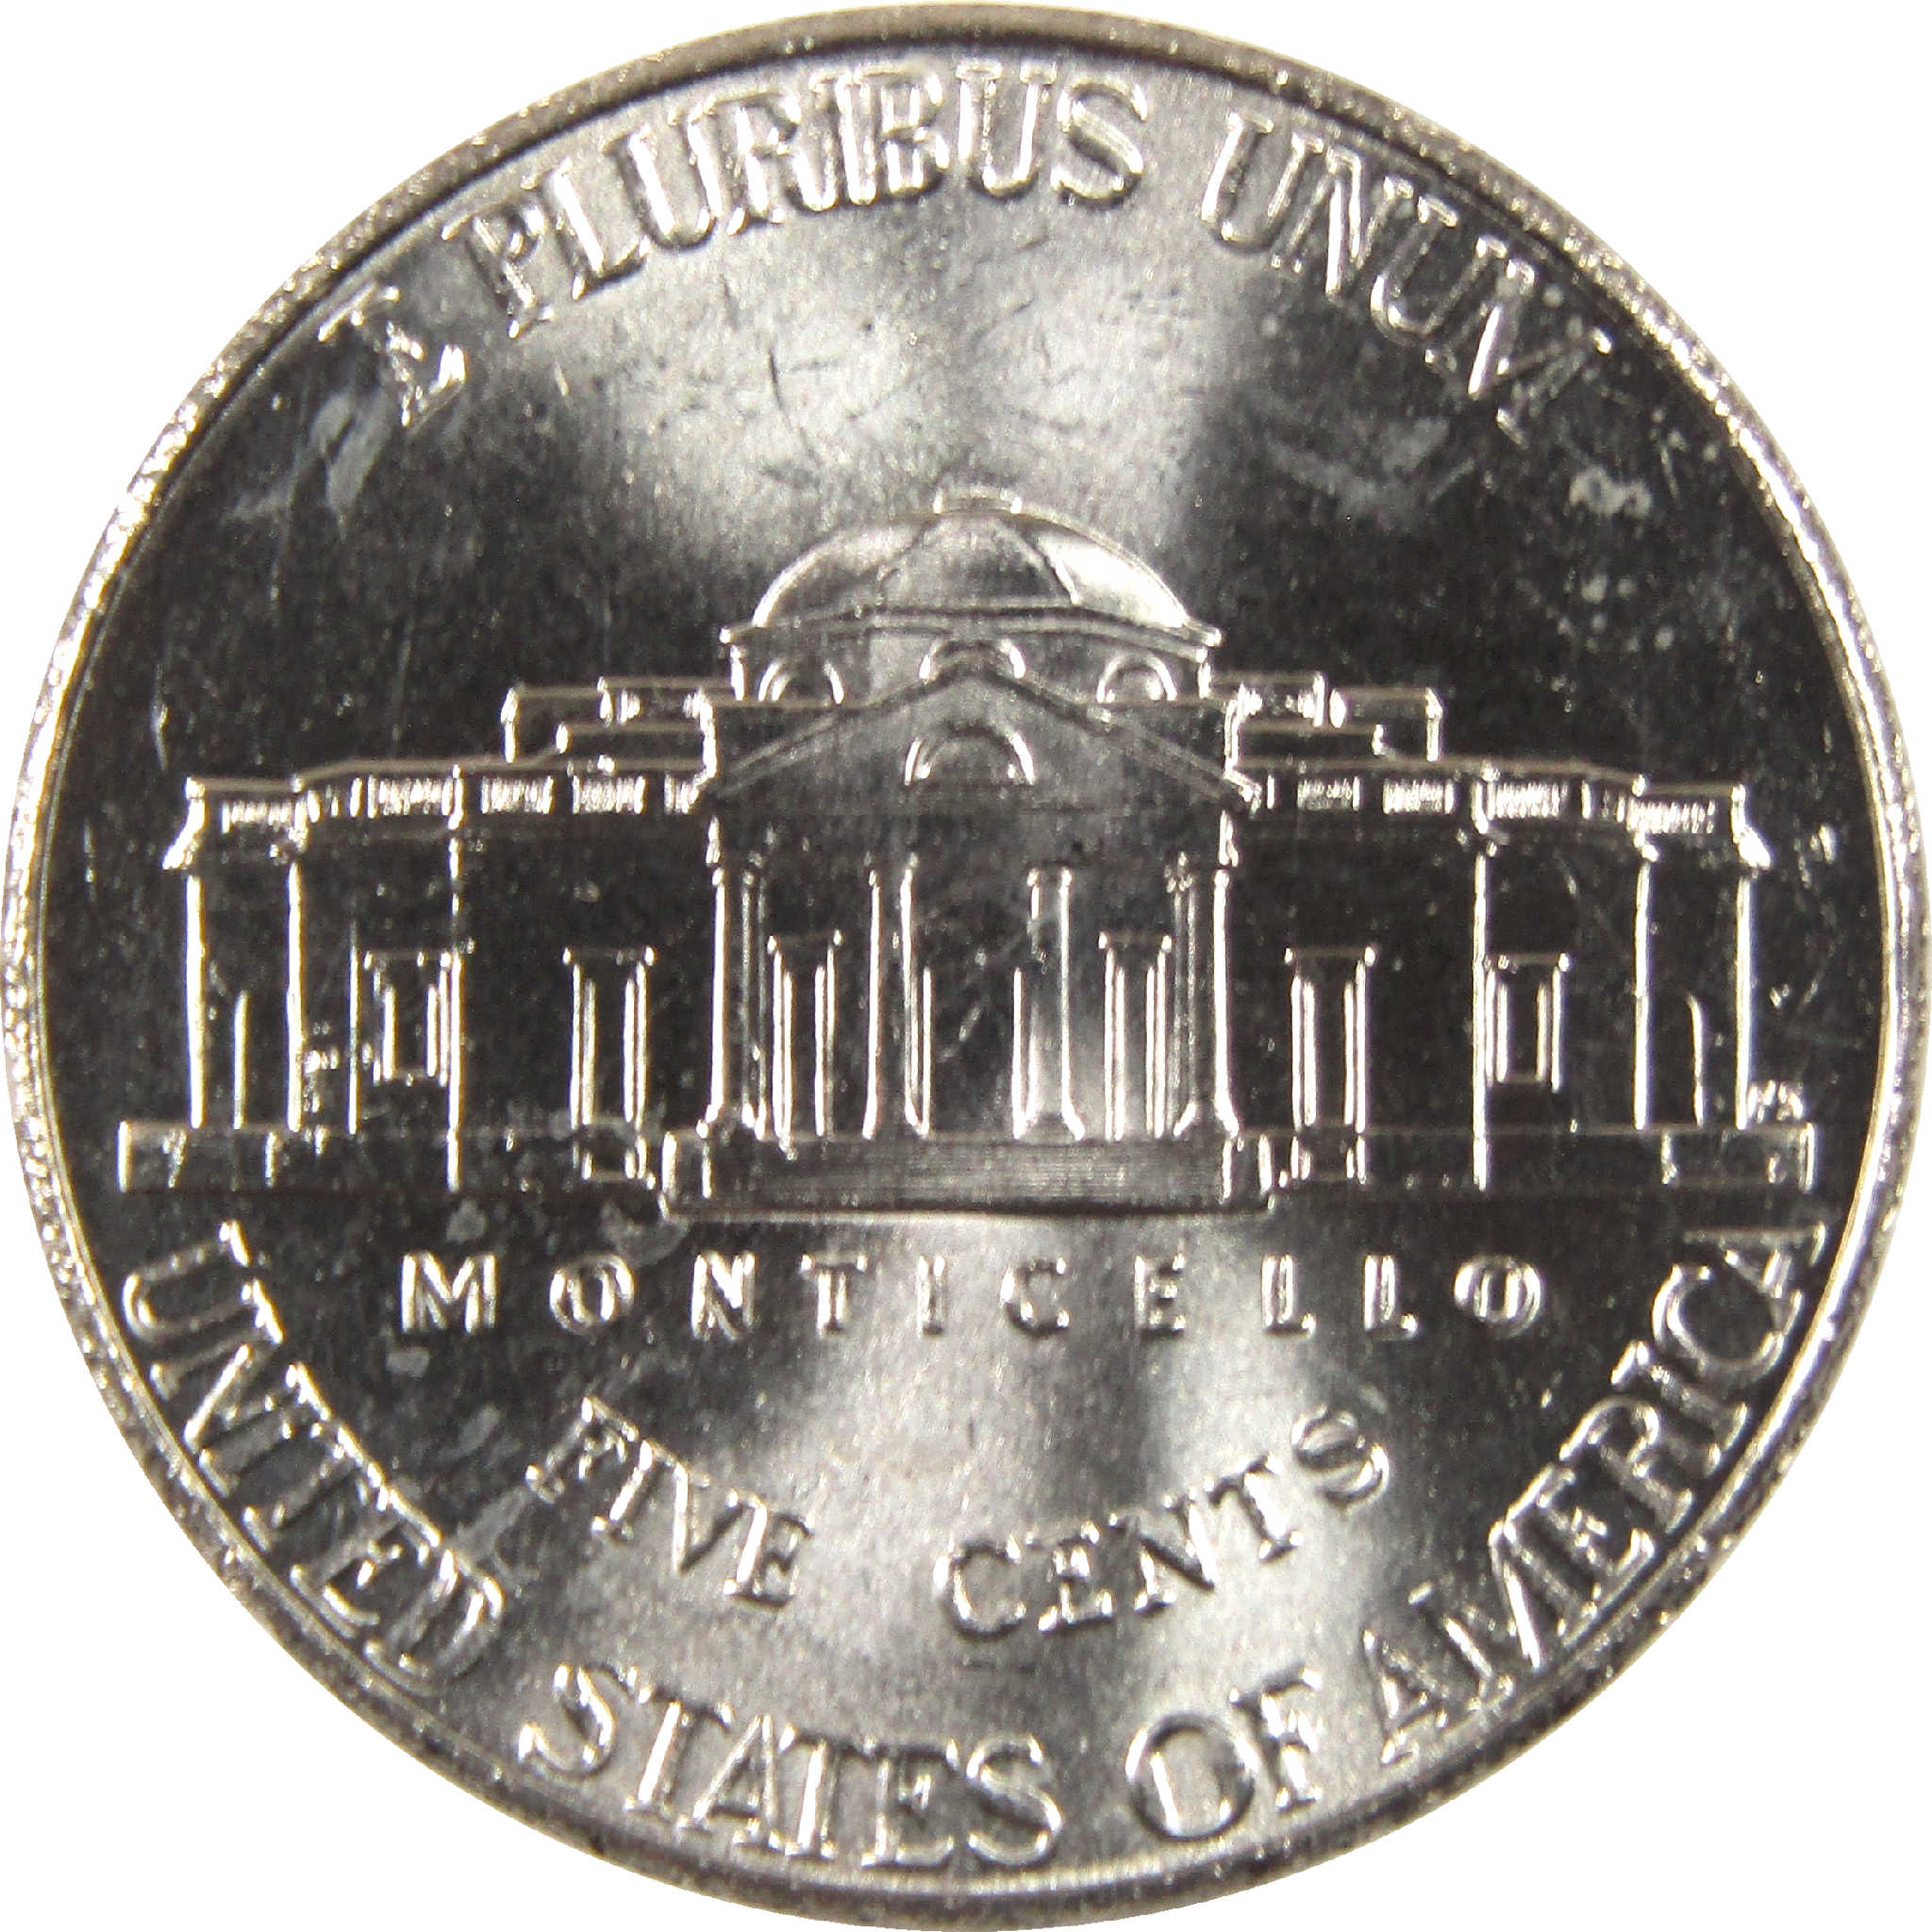 2018 D Jefferson Nickel BU Uncirculated 5c Coin